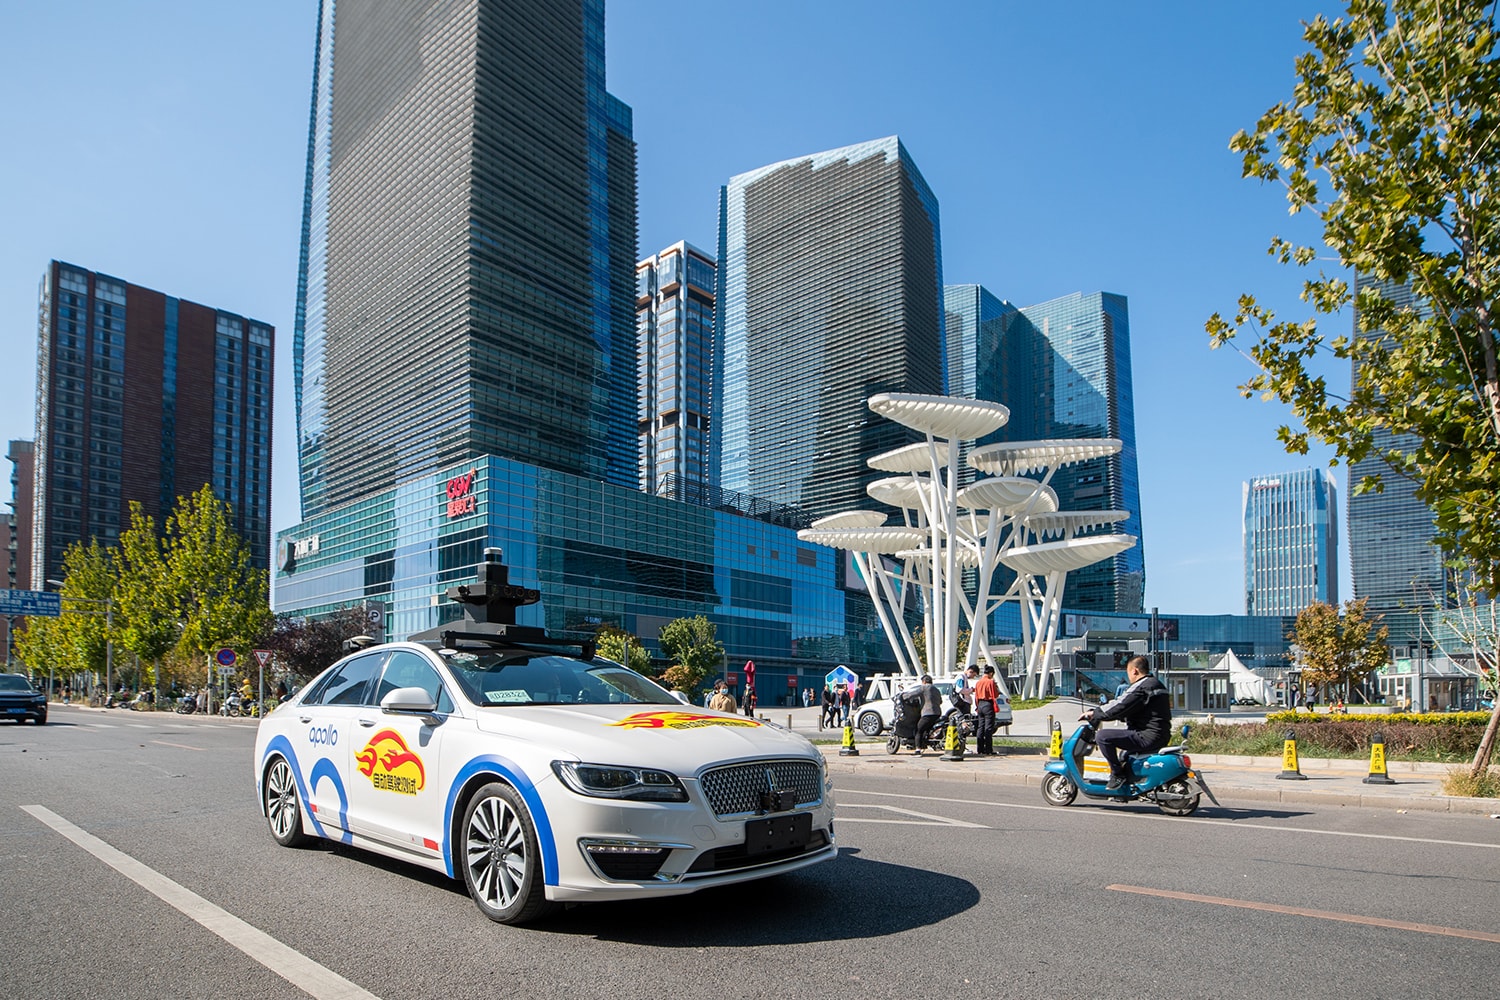 Baidu Launches Driverless Taxi Service Beijing Info China 10 Apollo